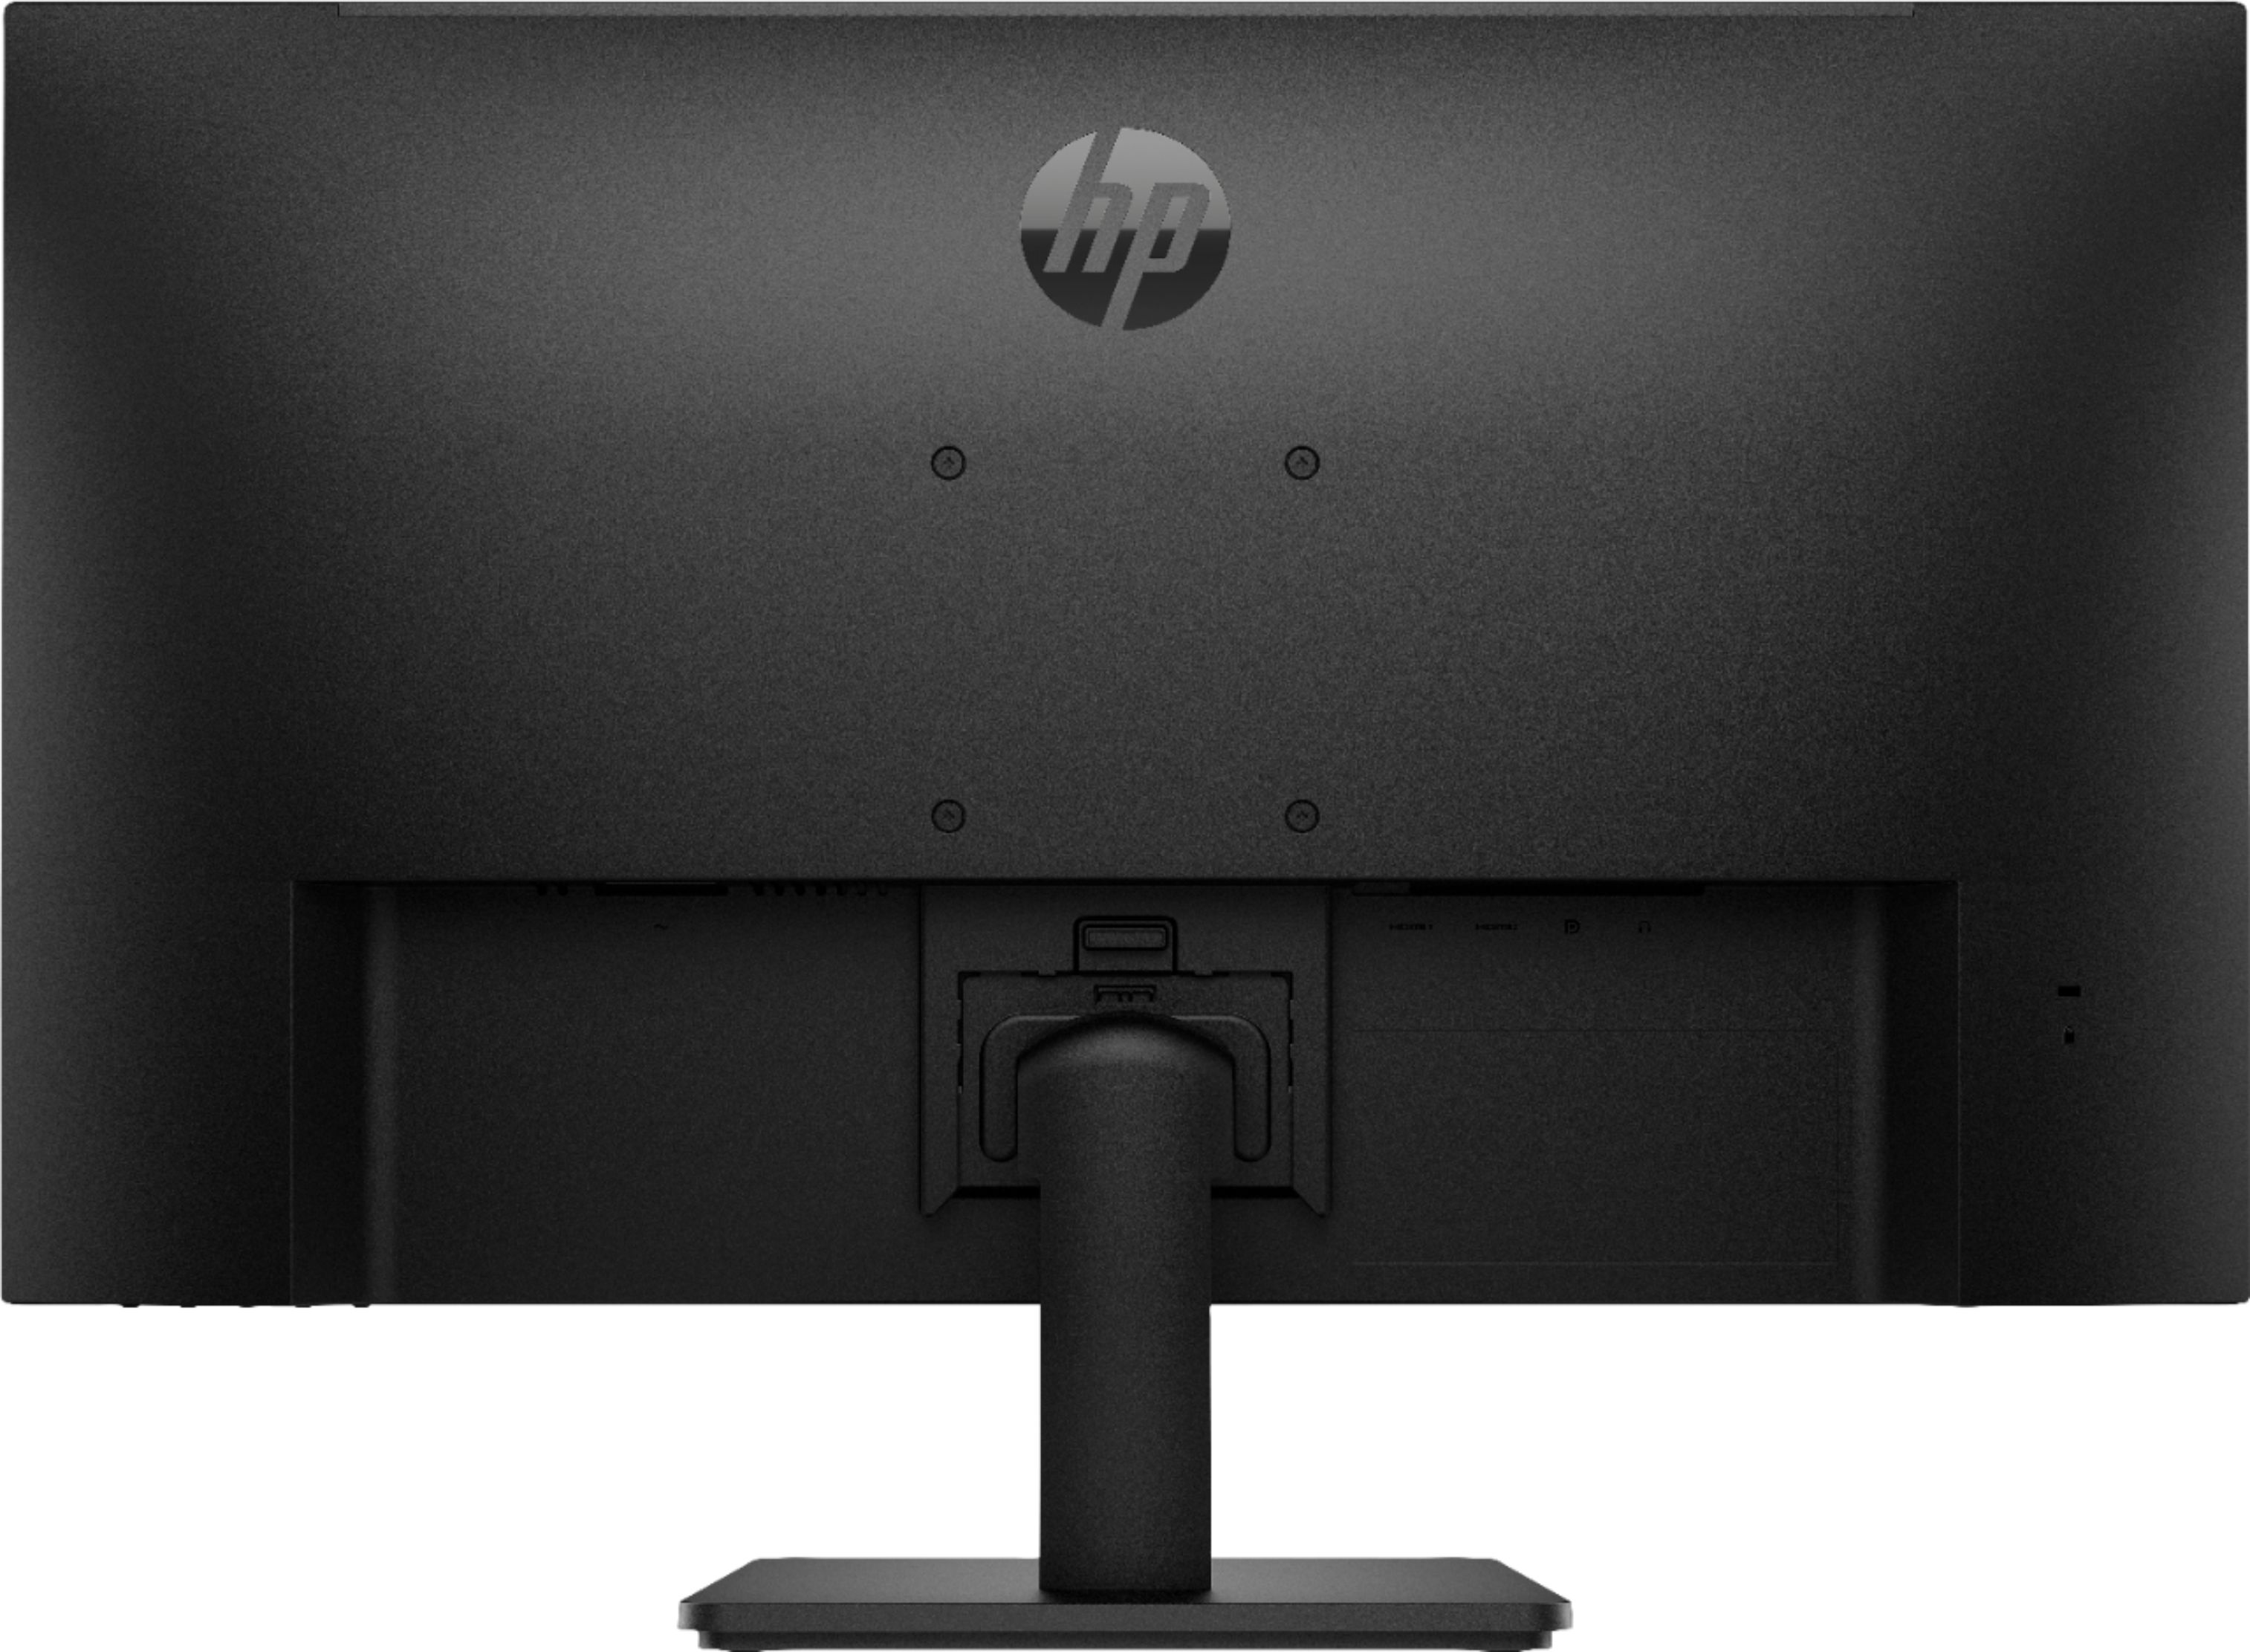 Back View: HP - LaserJet Enterprise M430F Black-and-White All-In-One Laser Printer - White